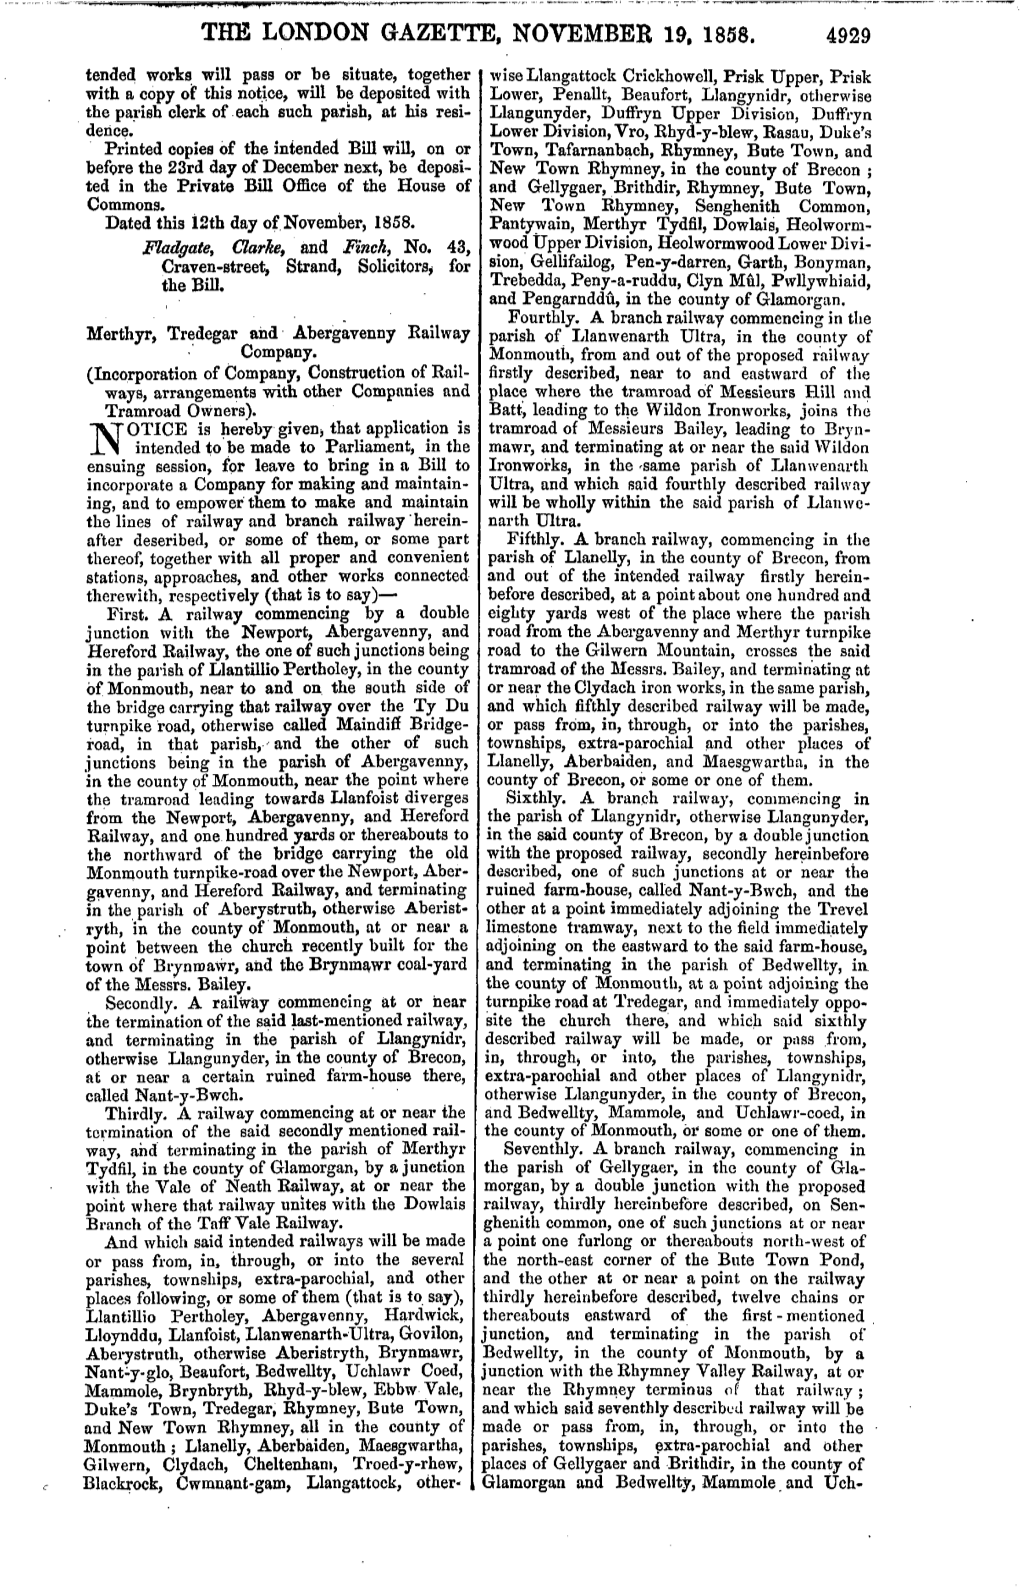 The London Gazette, November 19, 1858